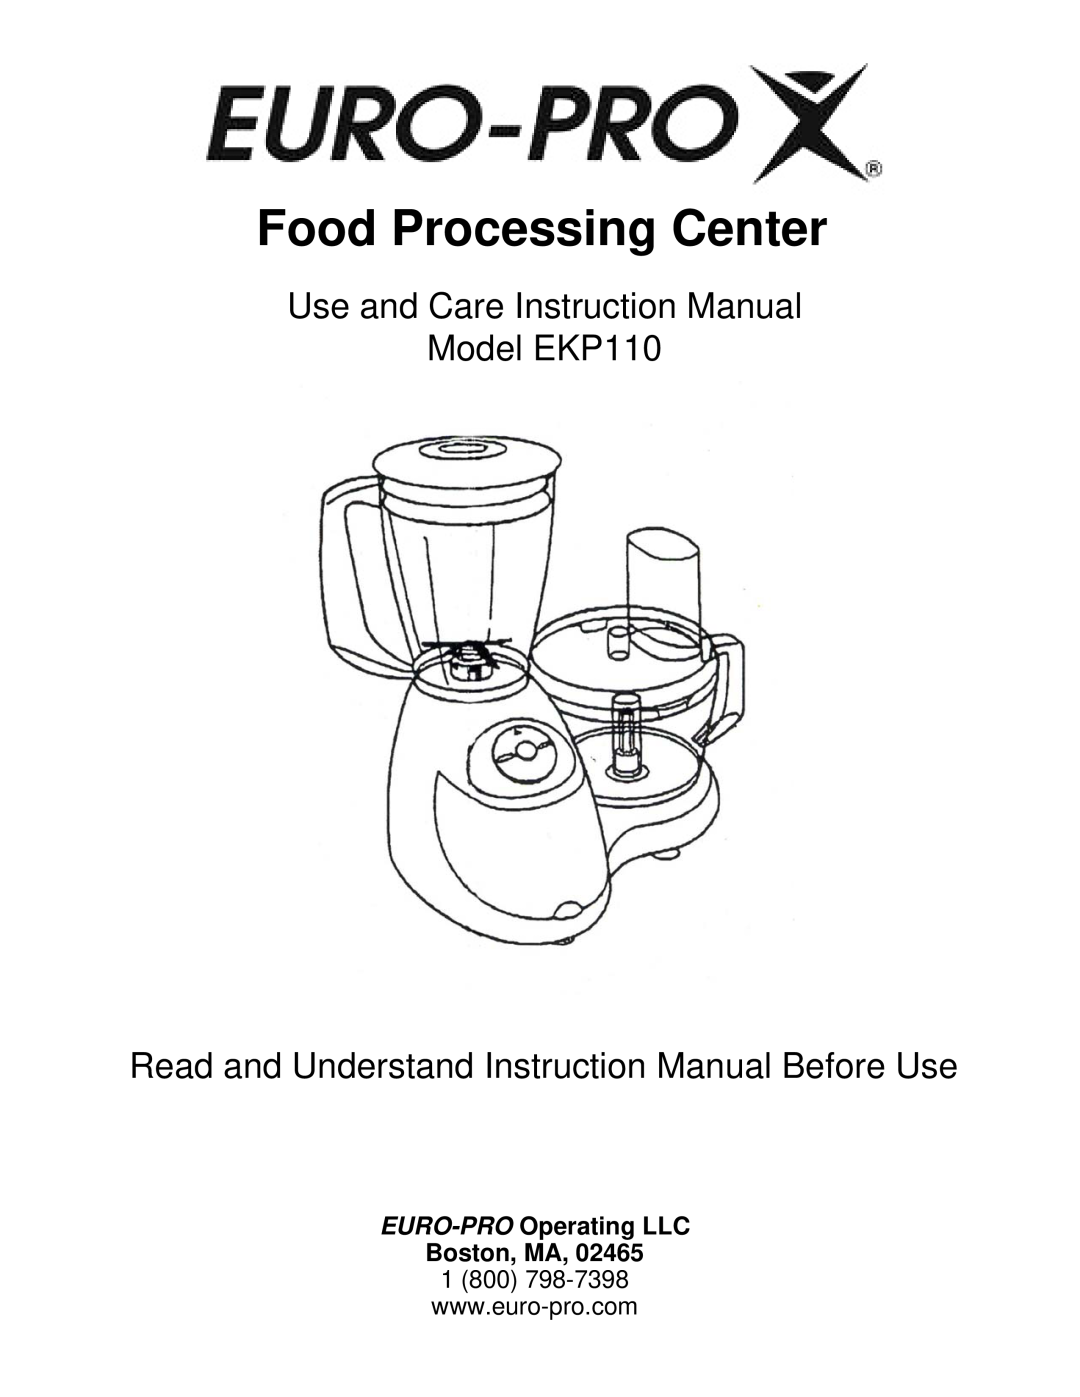 Euro-Pro EKP110 instruction manual EURO-PRO Operating LLC Boston, MA, Food Processing Center 